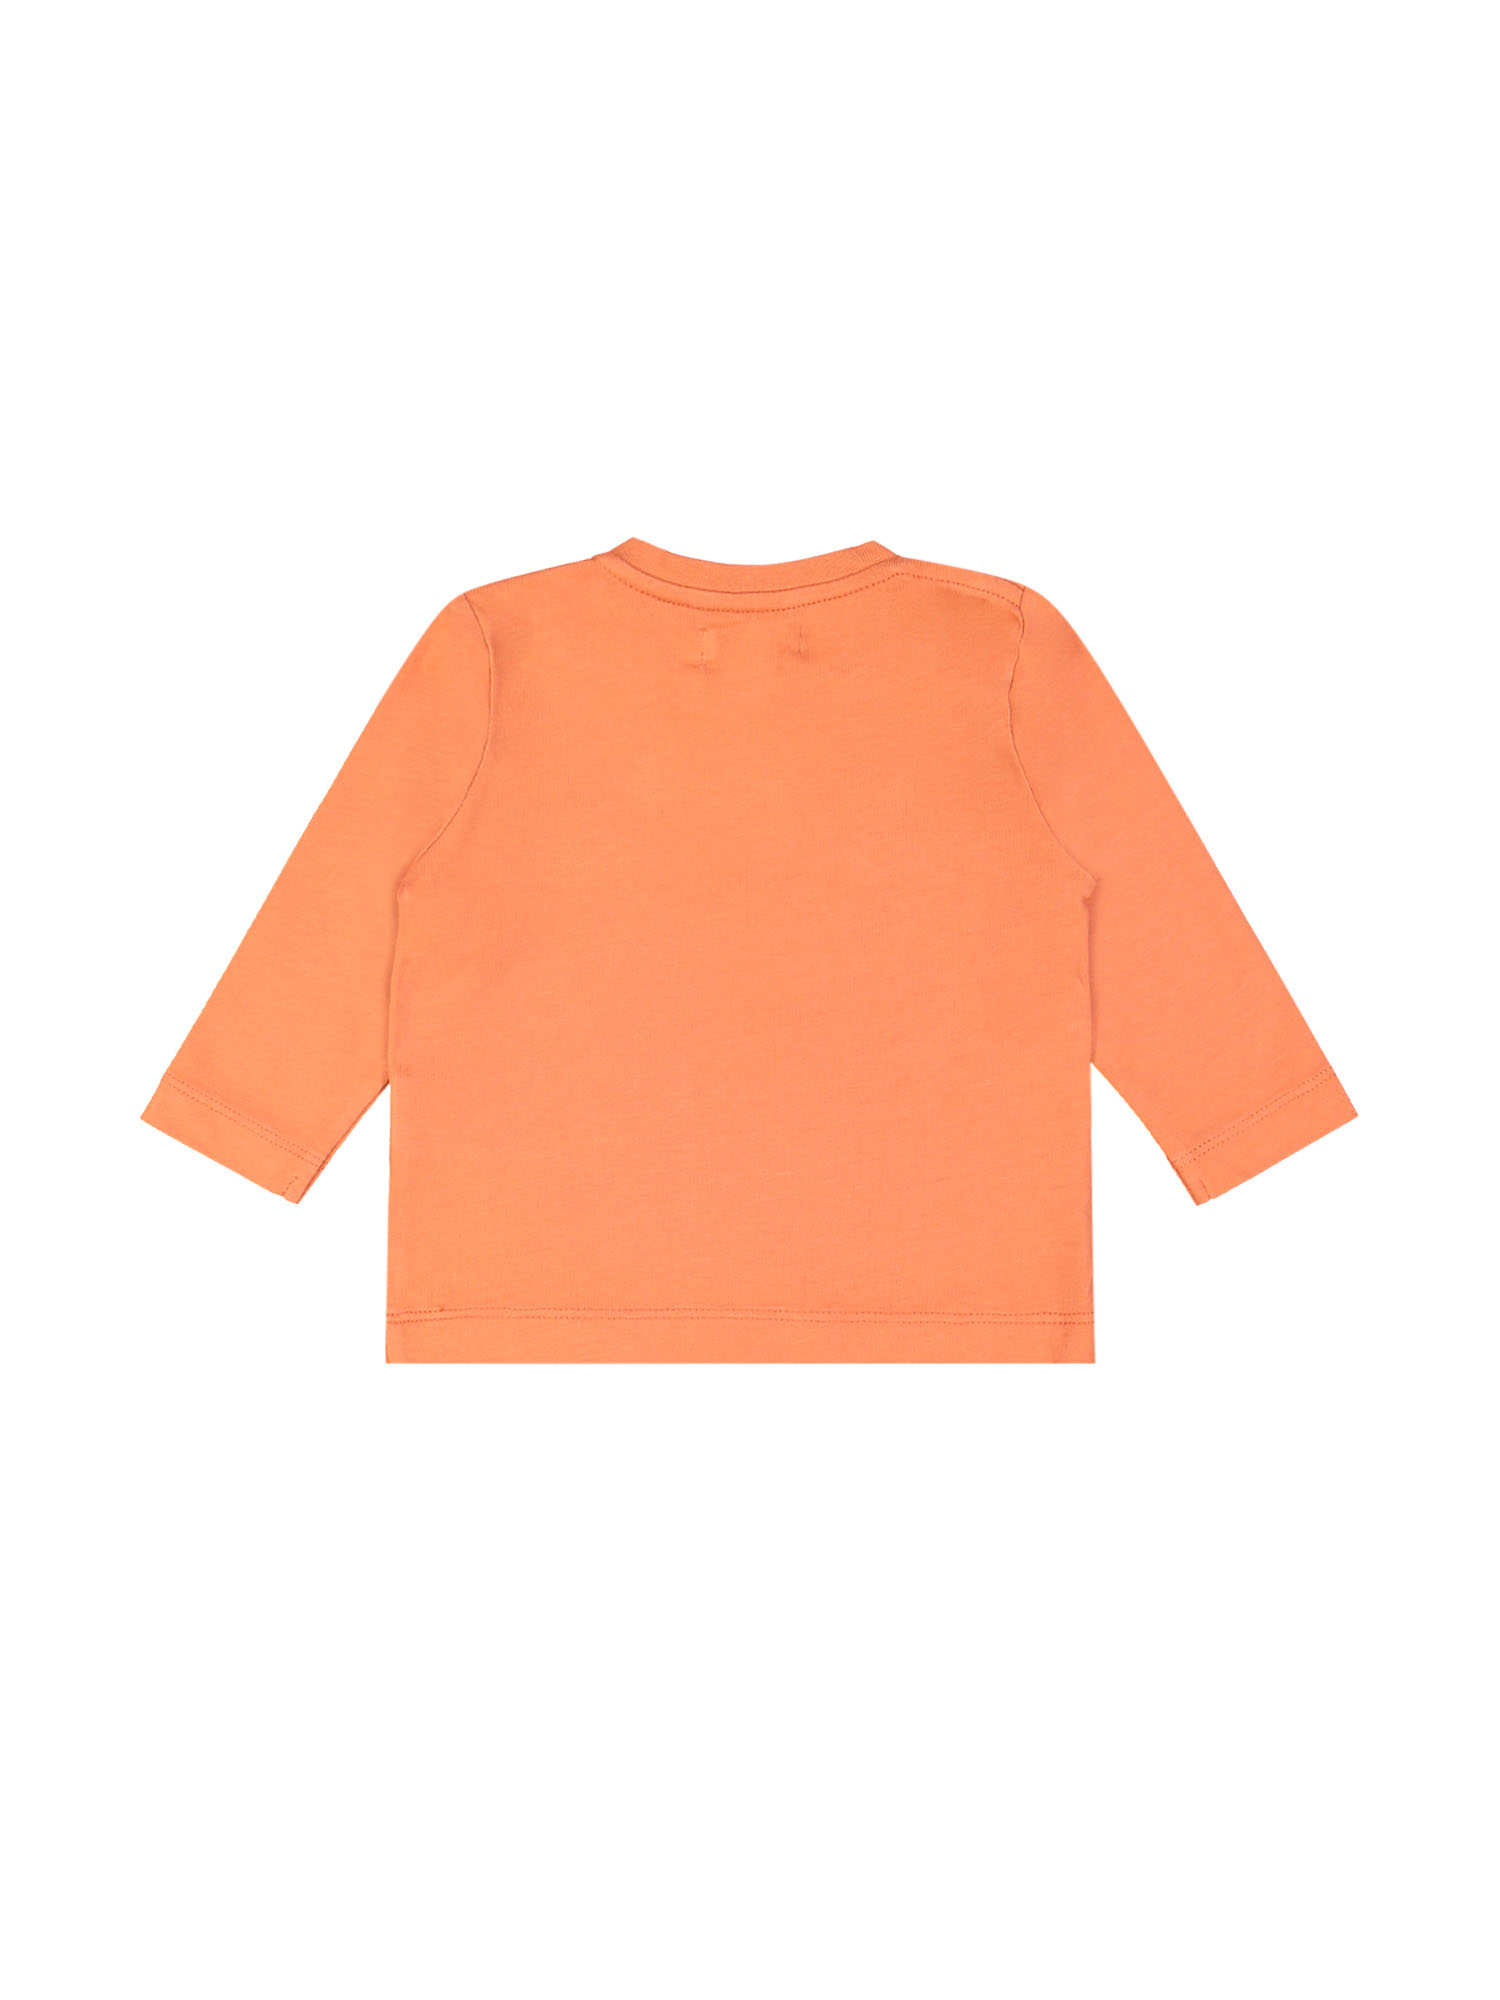 T-shirt mini home alone oranje 18m